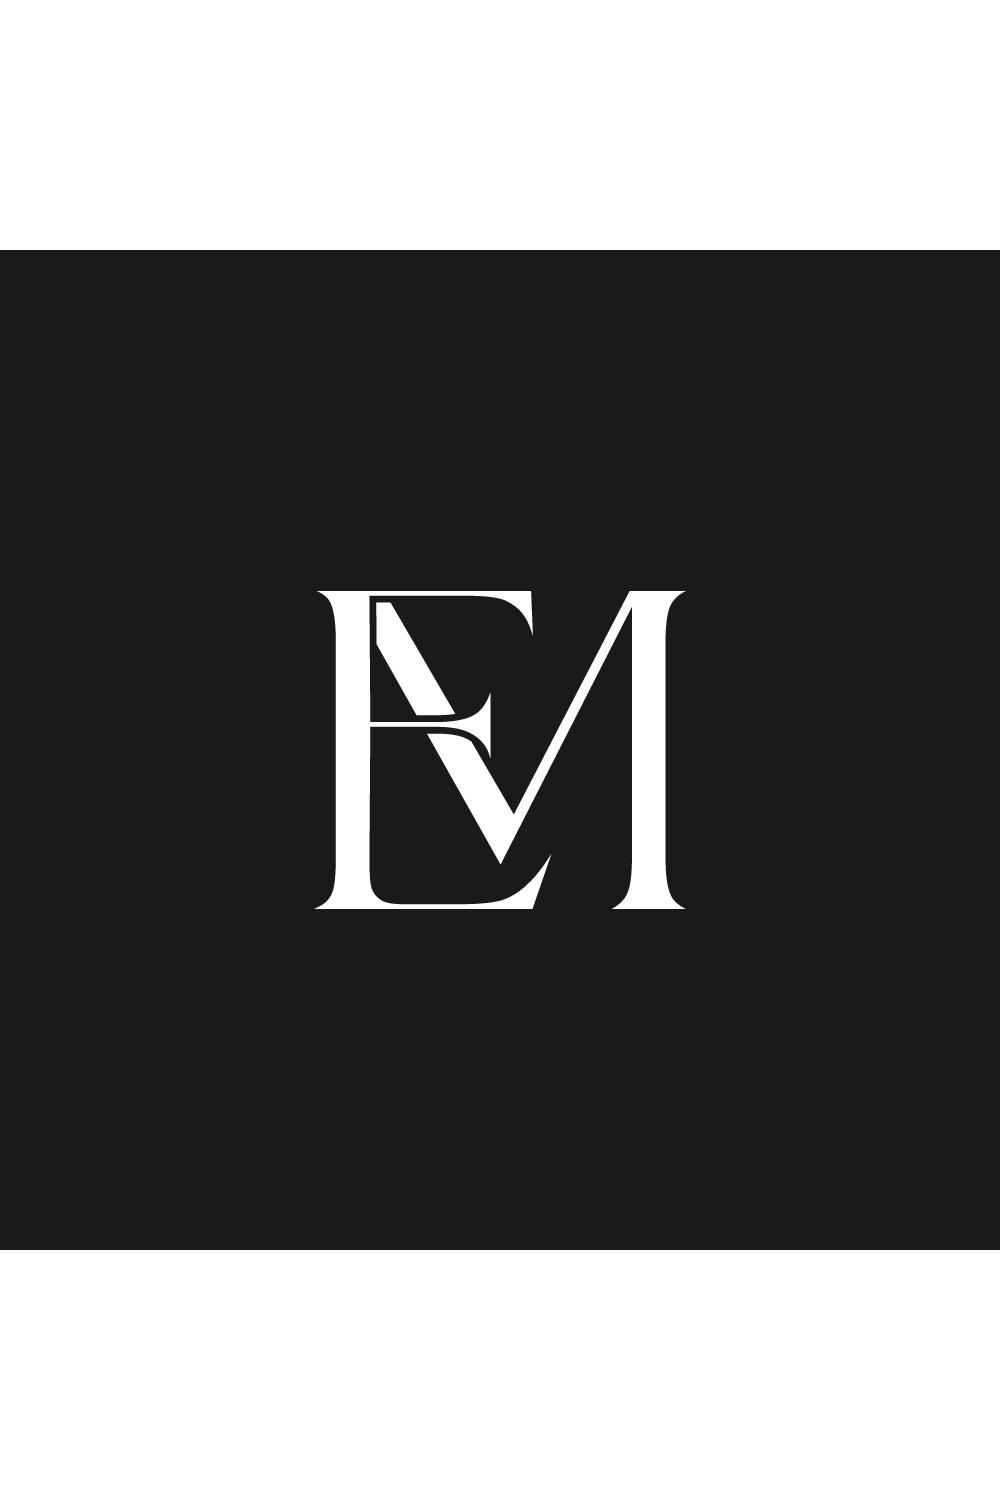 EM logo Design pinterest preview image.